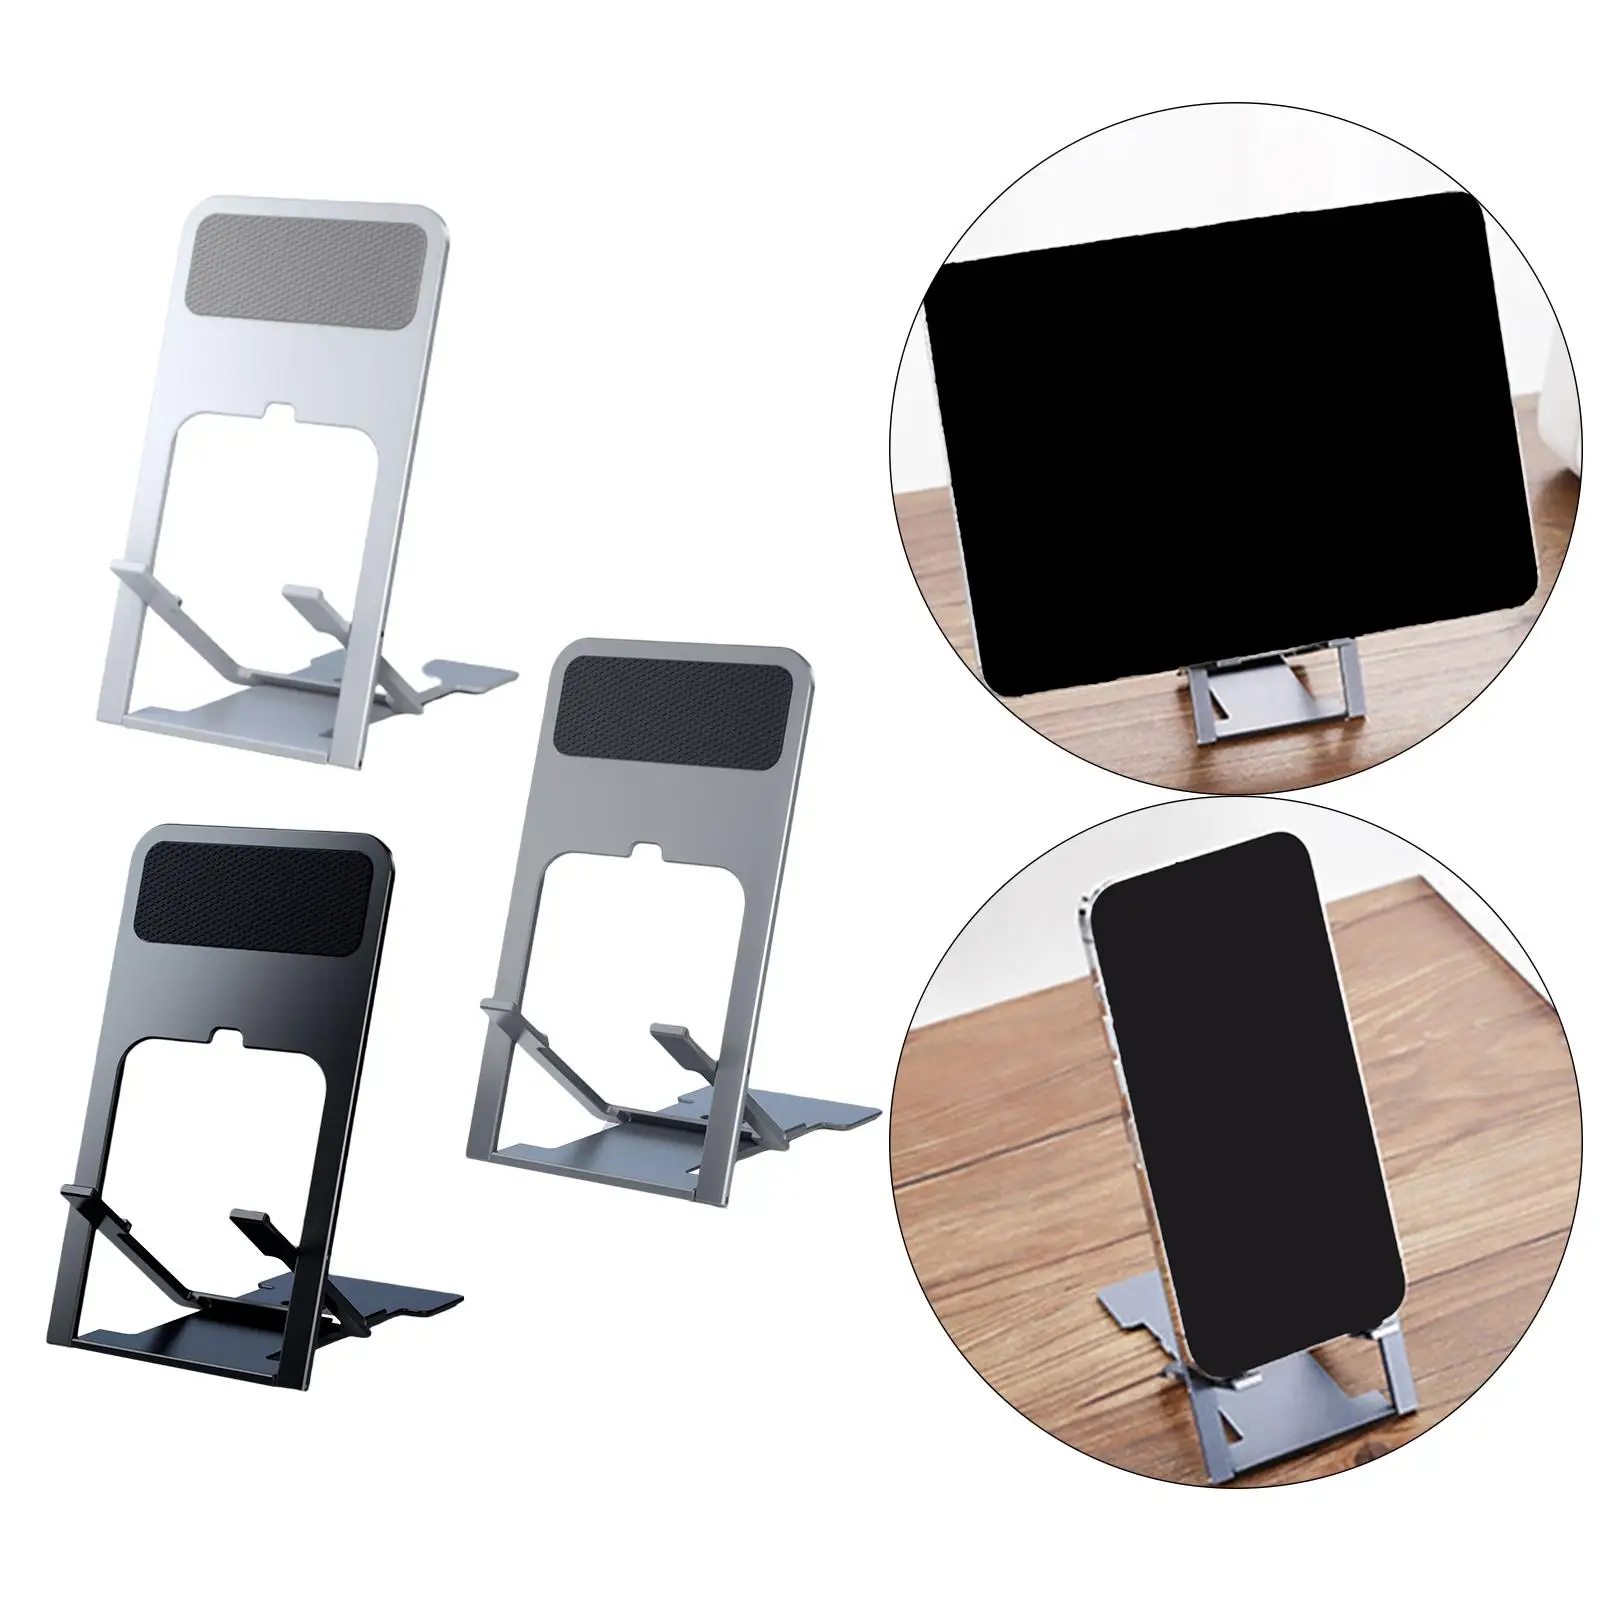 Vertical Folding Mobile Phone Holder Stand Angle Adjustable Stable Desktop Charger for Learning Hotel Office